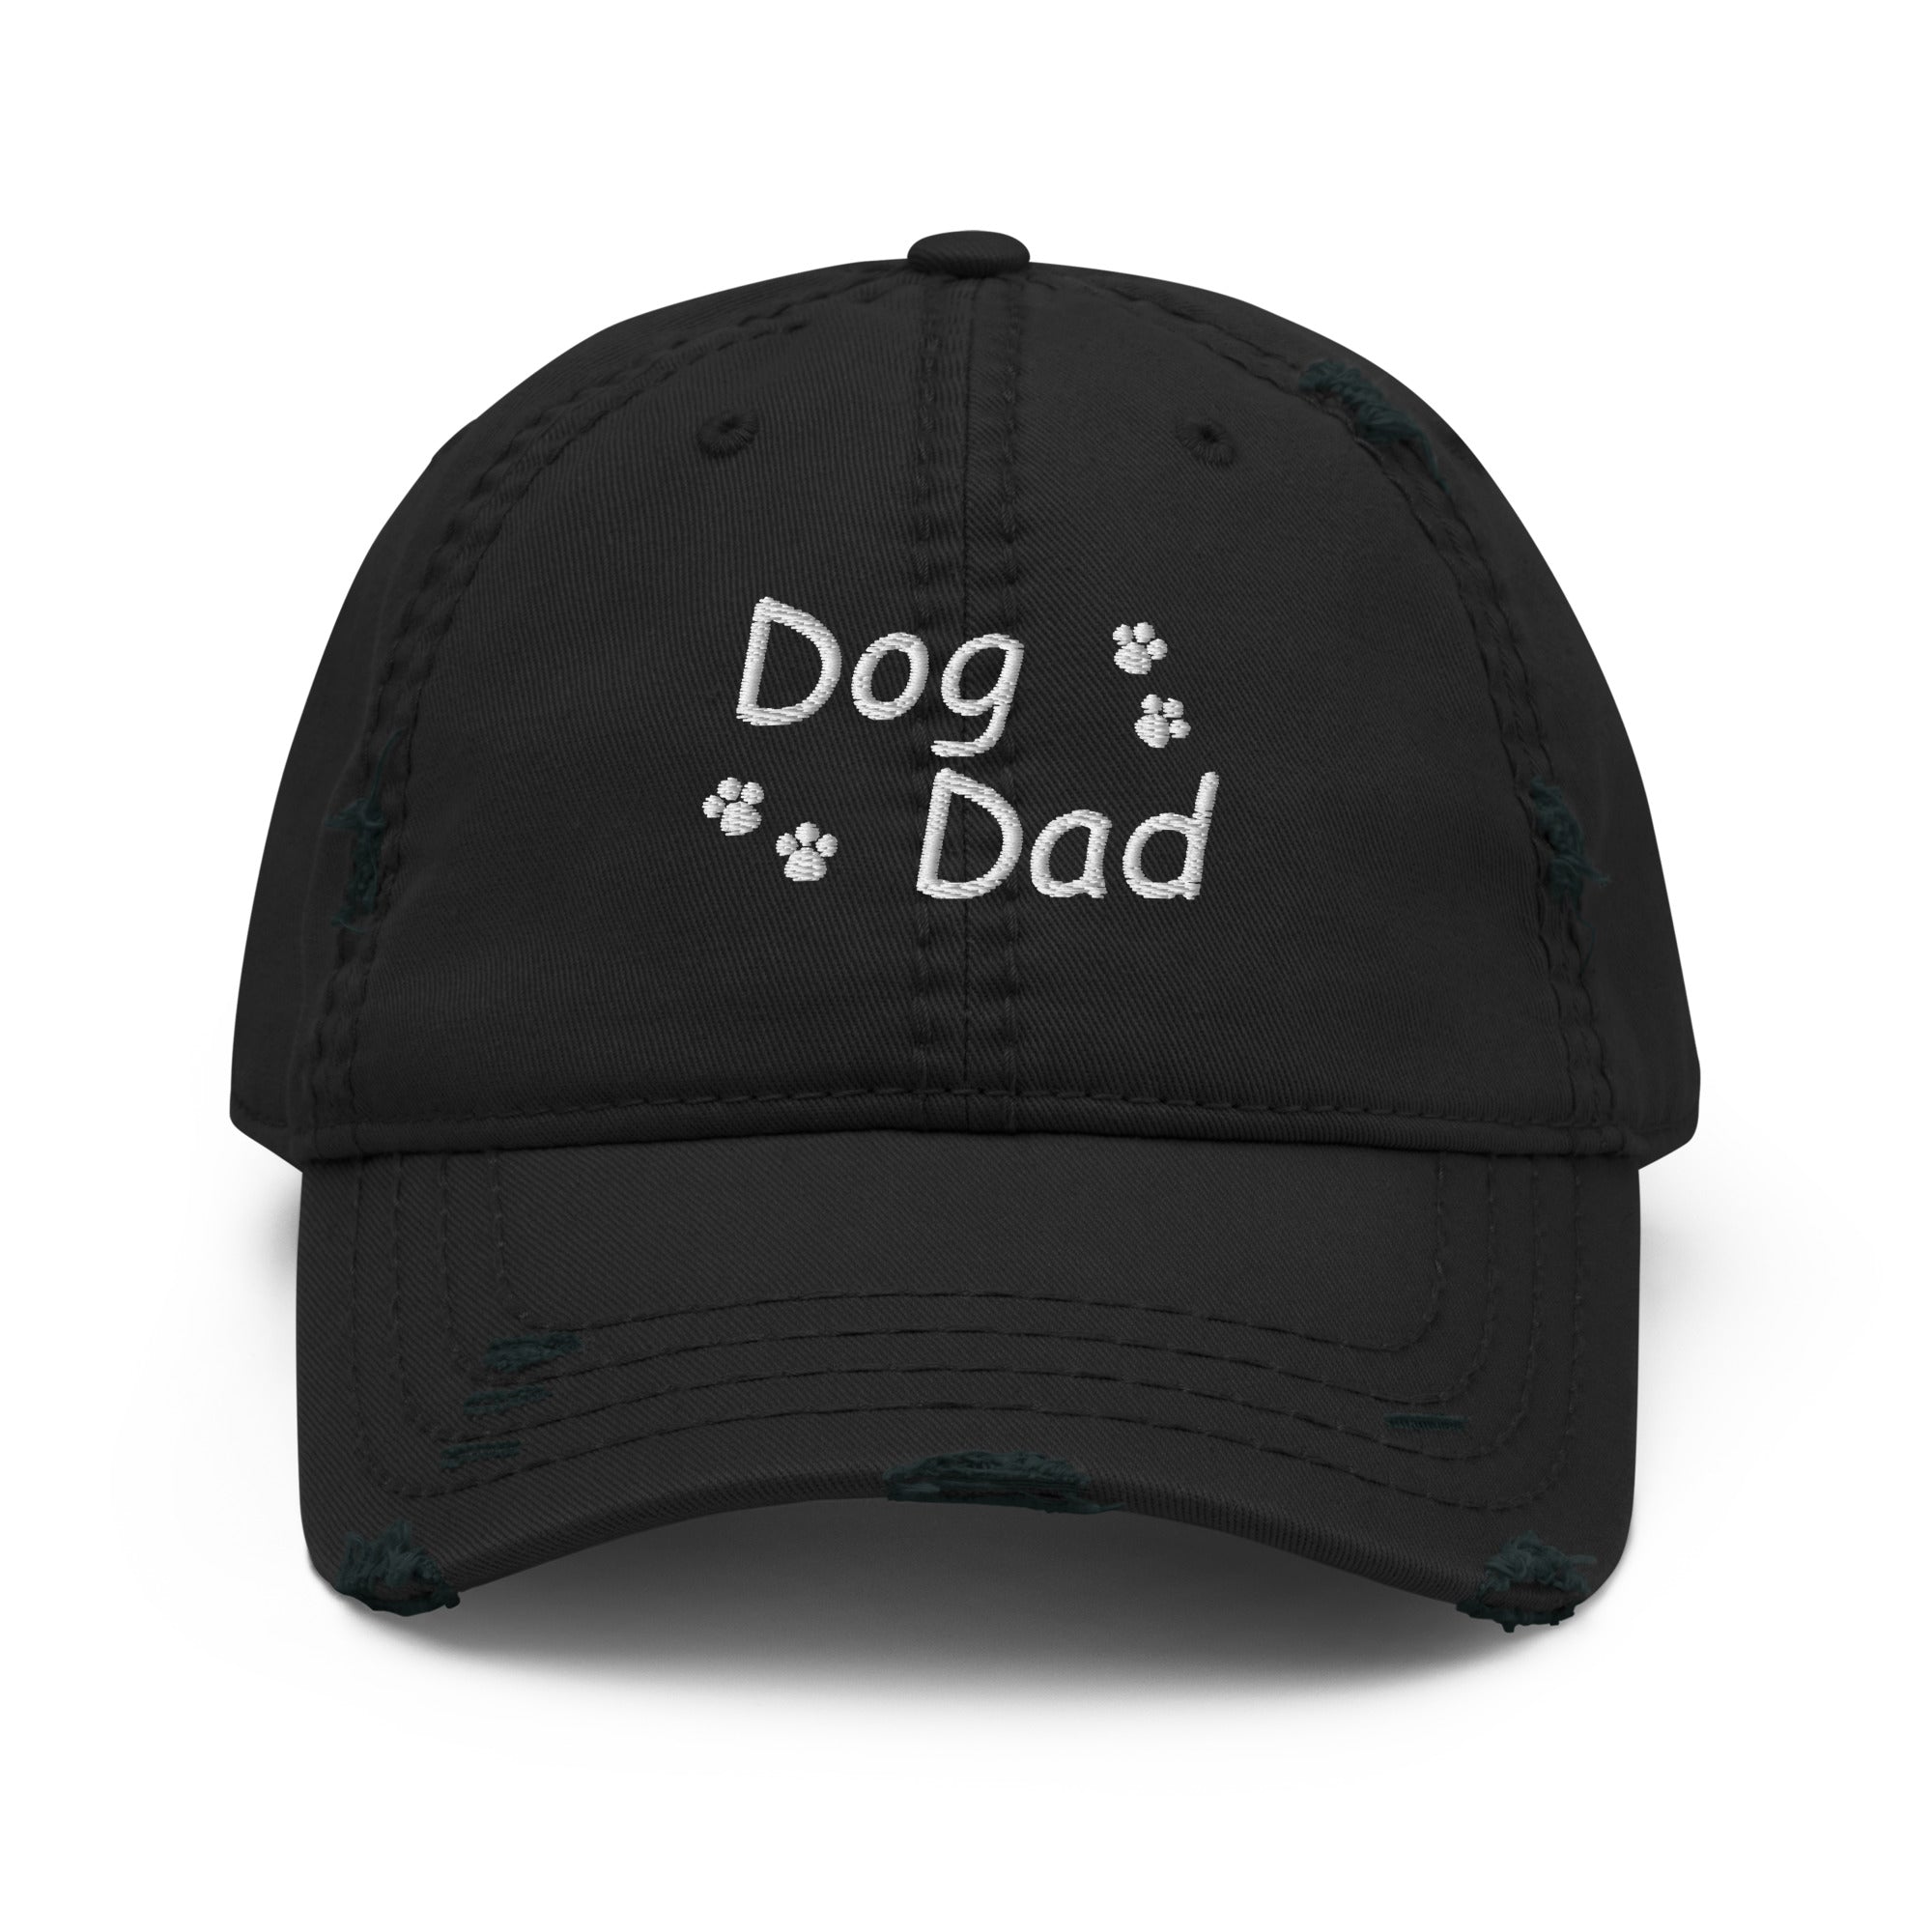 Black distressed dad hat for Dog Dads